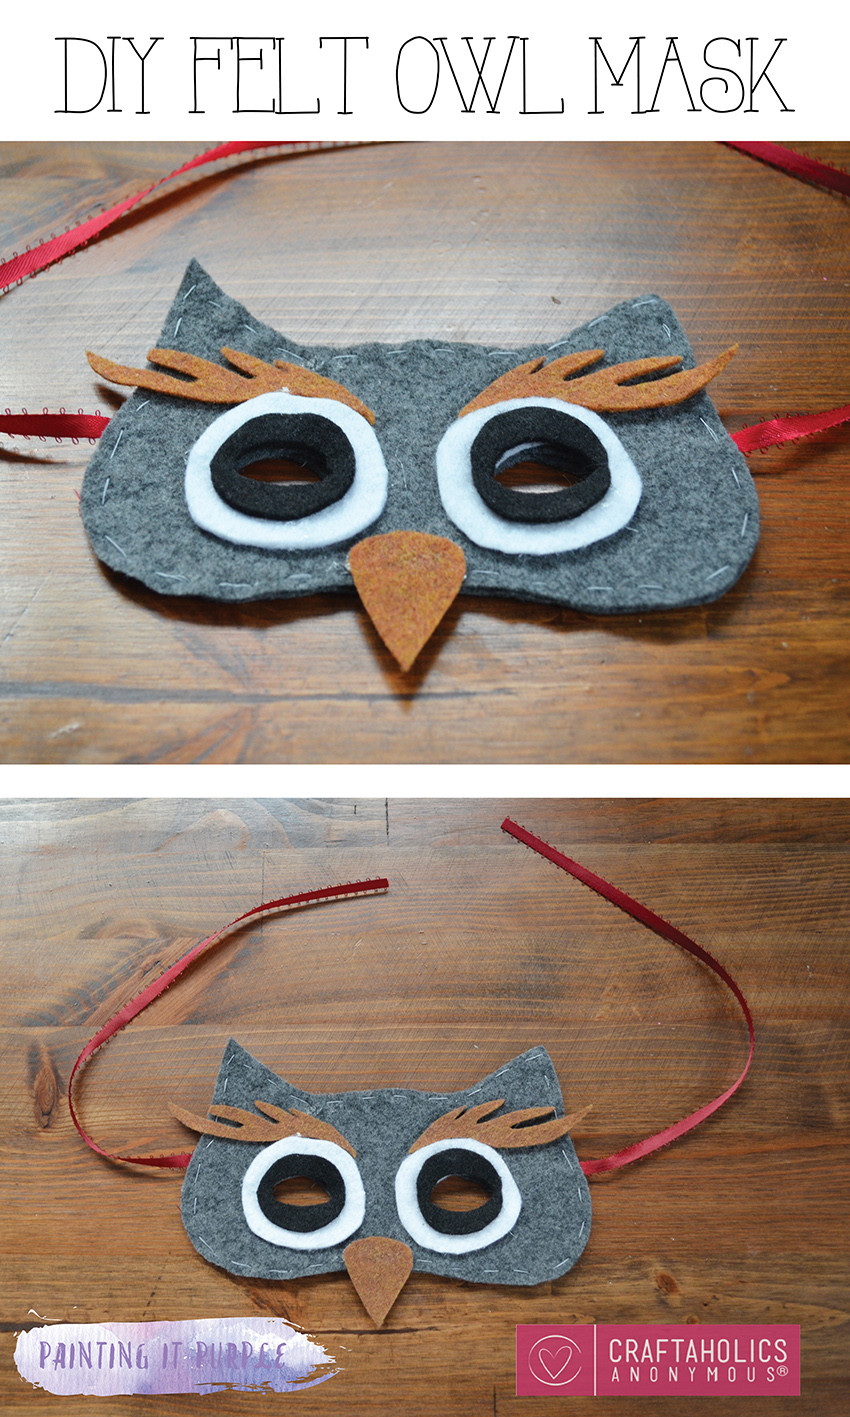 DIY Owl Mask
 Craftaholics Anonymous